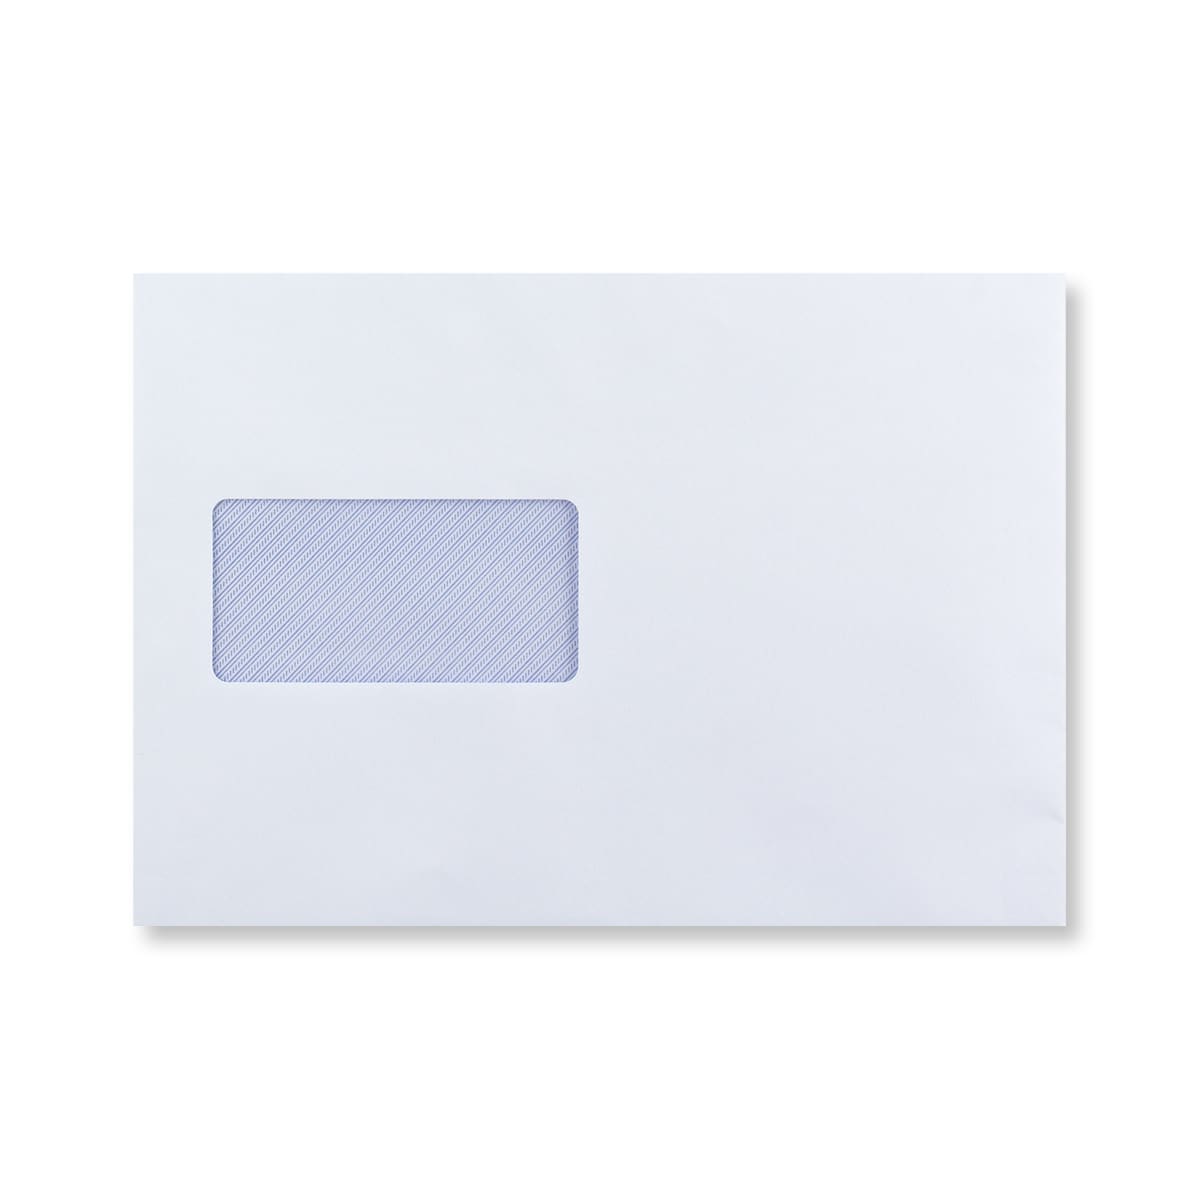 162x238mm White Wallet Gummed Inside Seams Window 90gsm Wove Envelopes